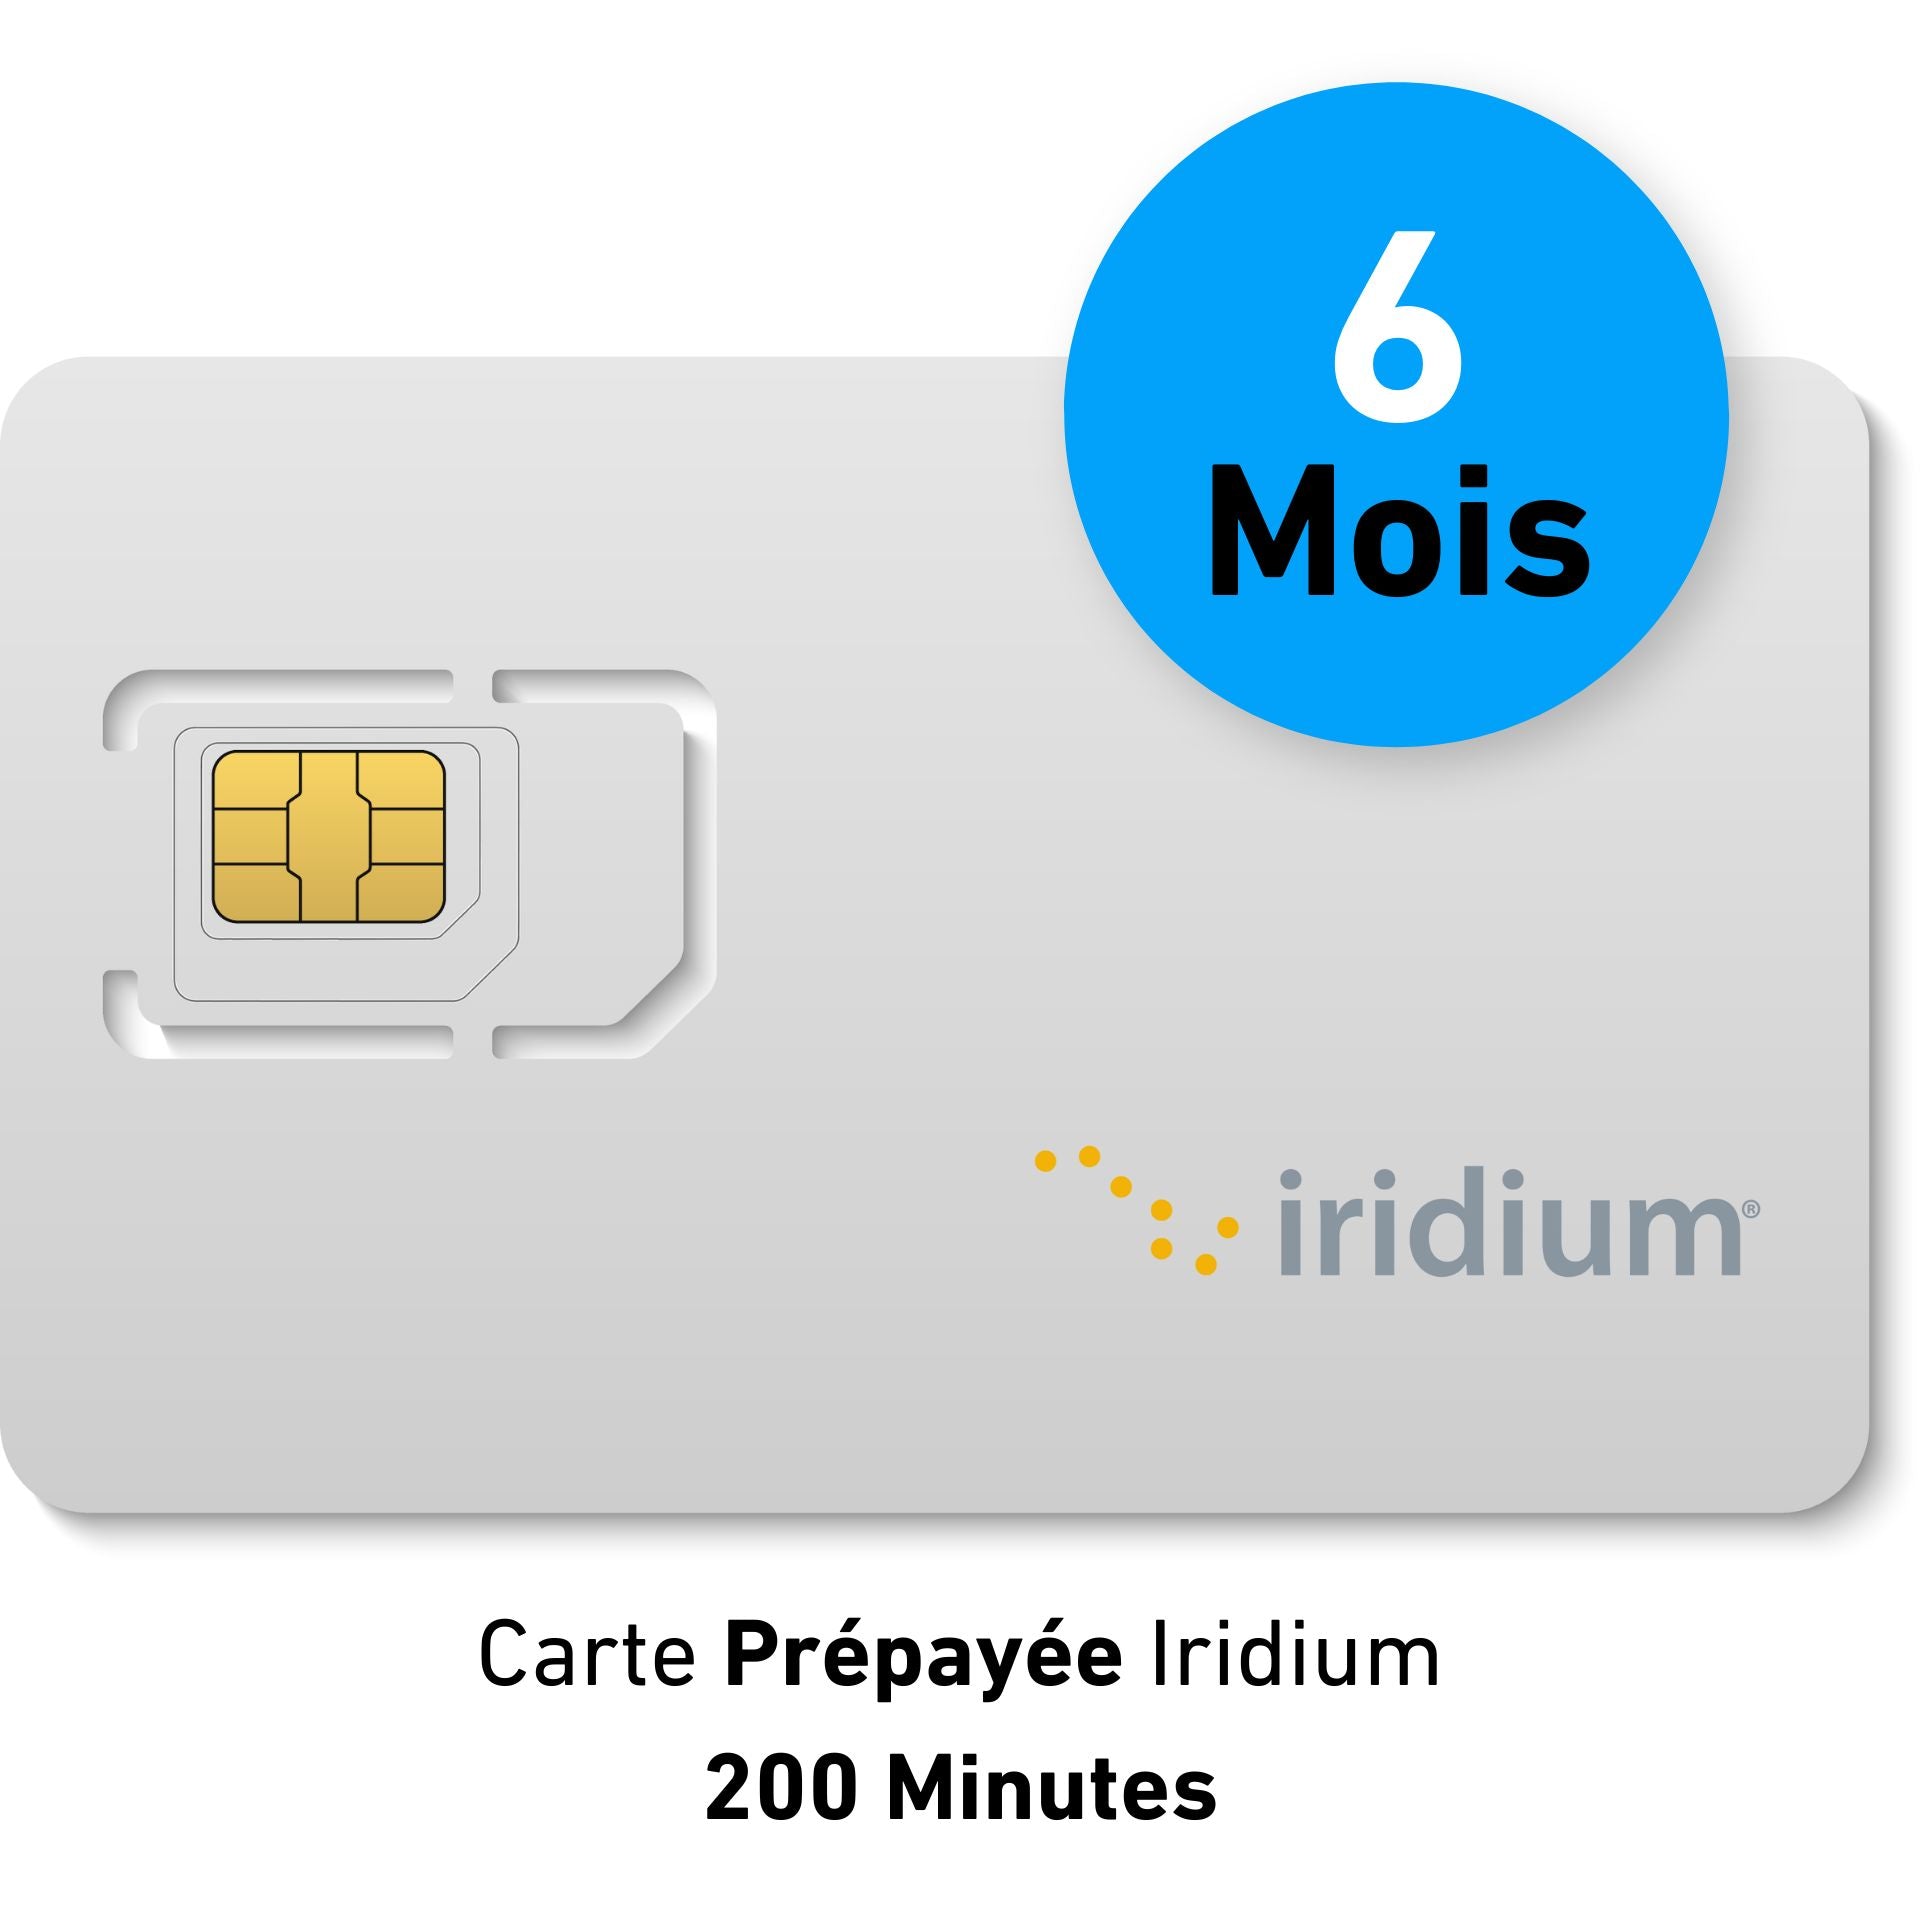 Carte Prépayée IRIDIUM - 200 min - 6 MOIS